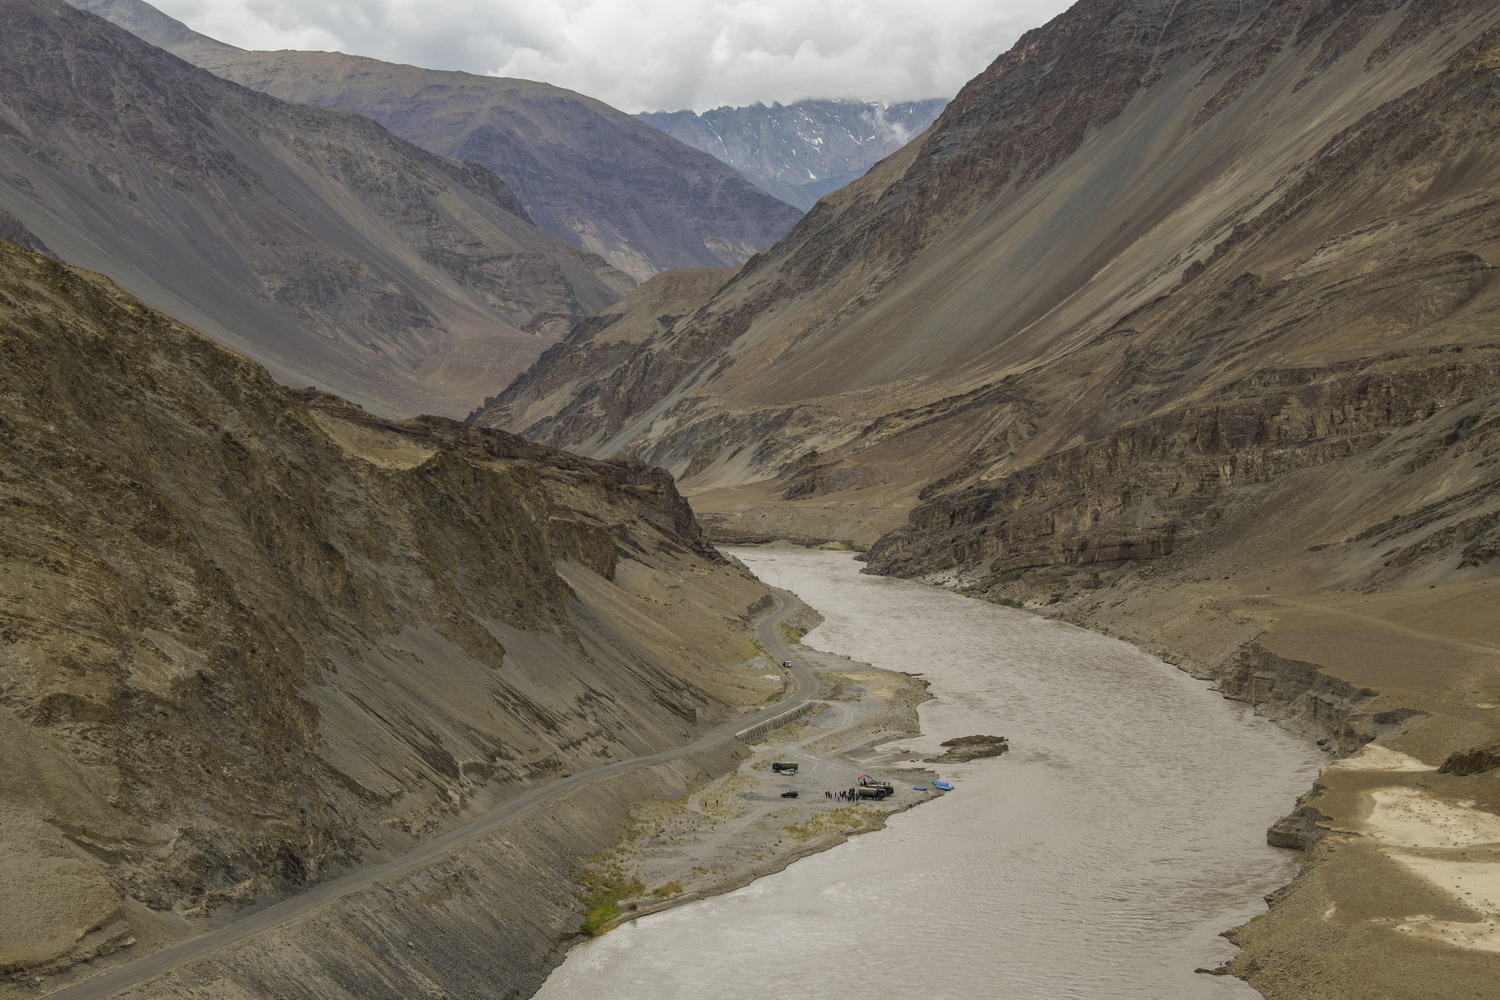 DSC_0192_1A2 - Indus River Valley